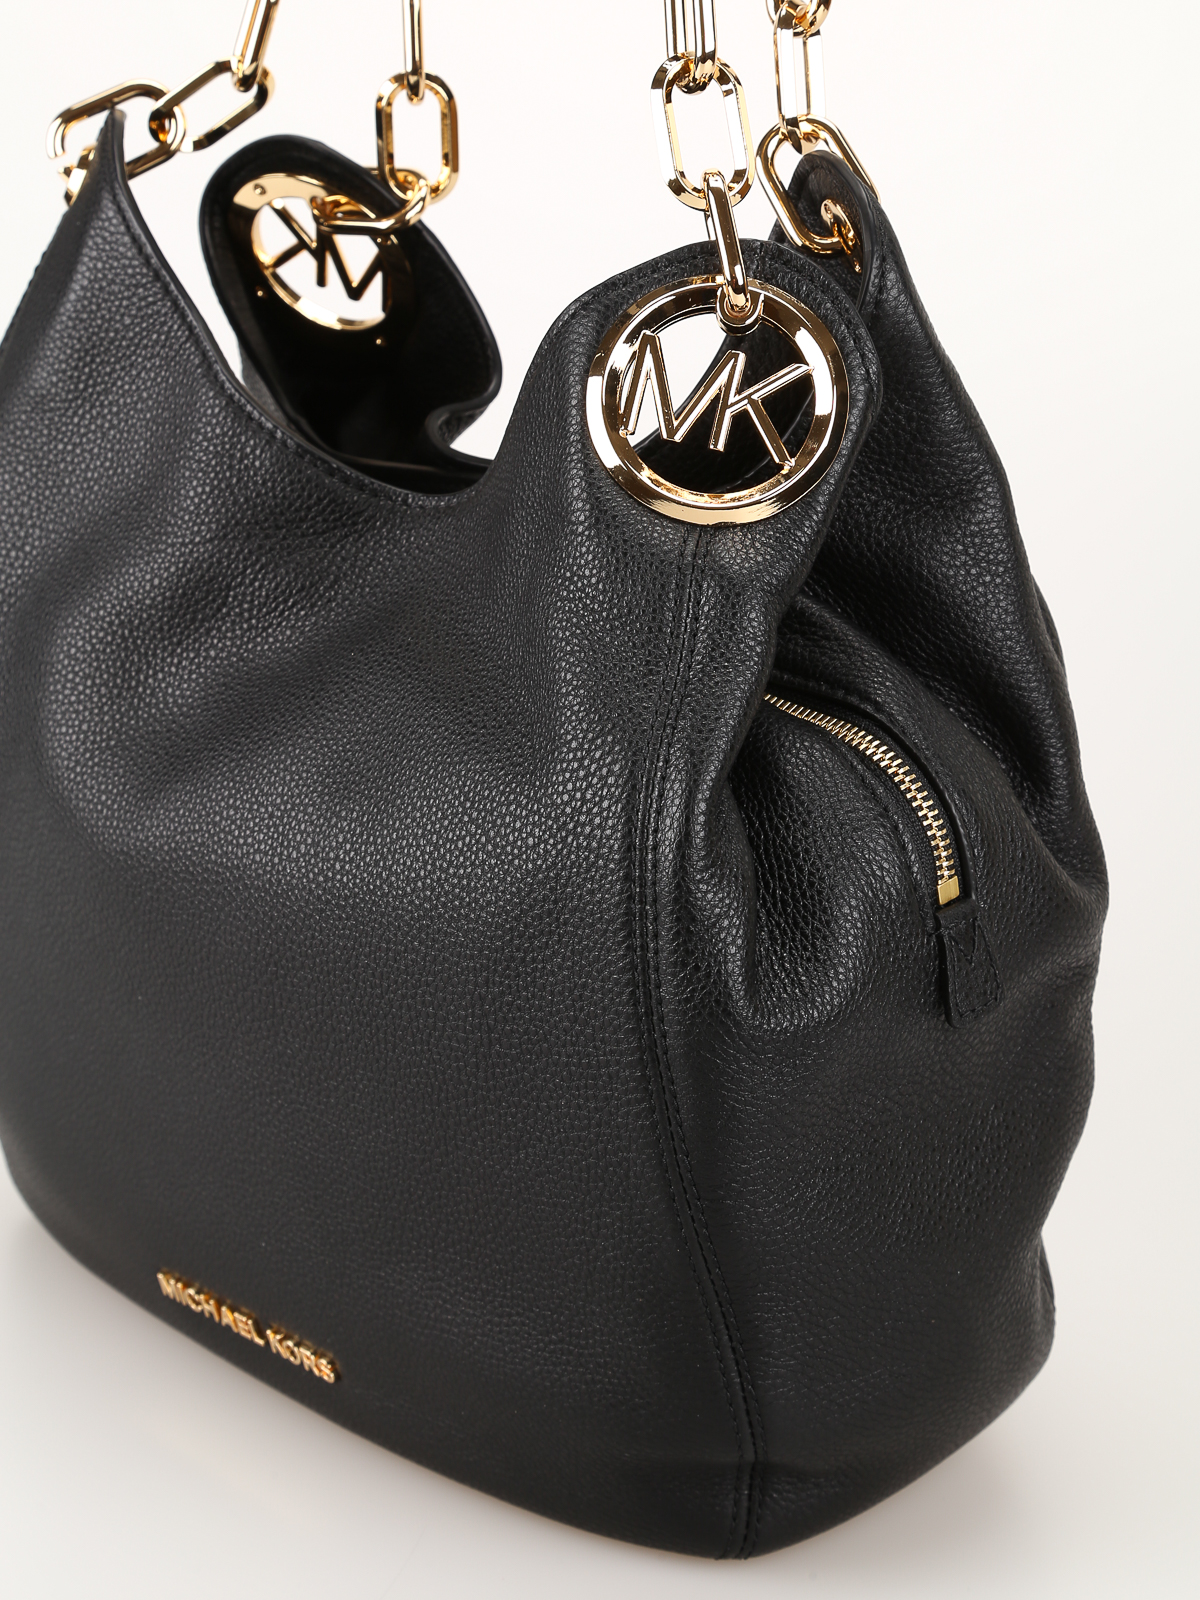 Lillie leather handbag Michael Kors Black in Leather  21120231